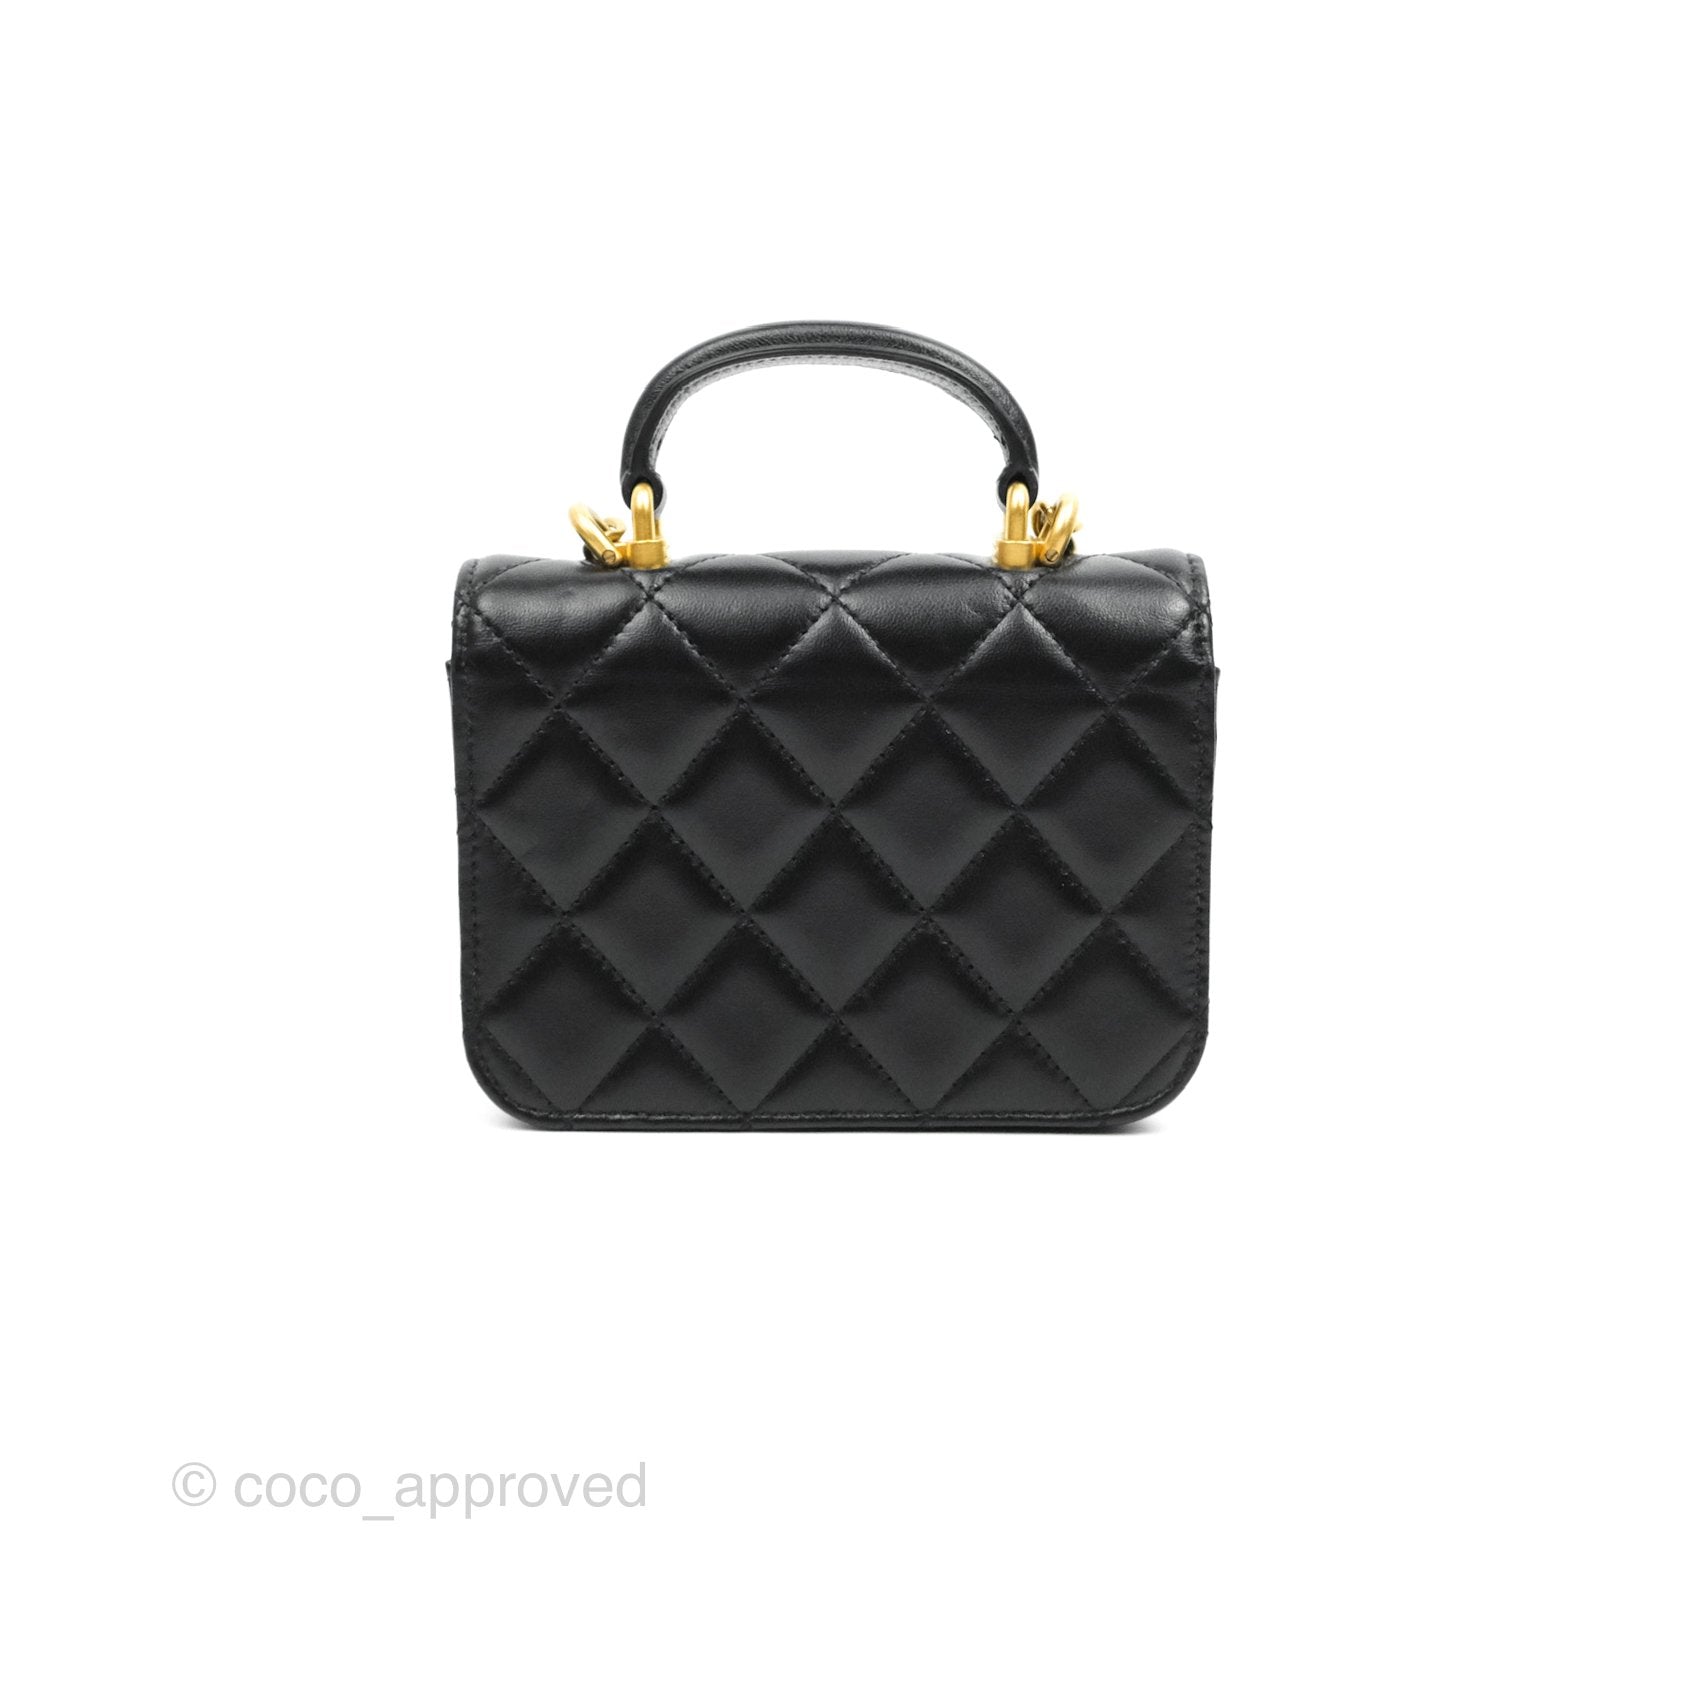 Chanel Black Lambskin Round Shoulder Bag Mini Q6B0261IK9001